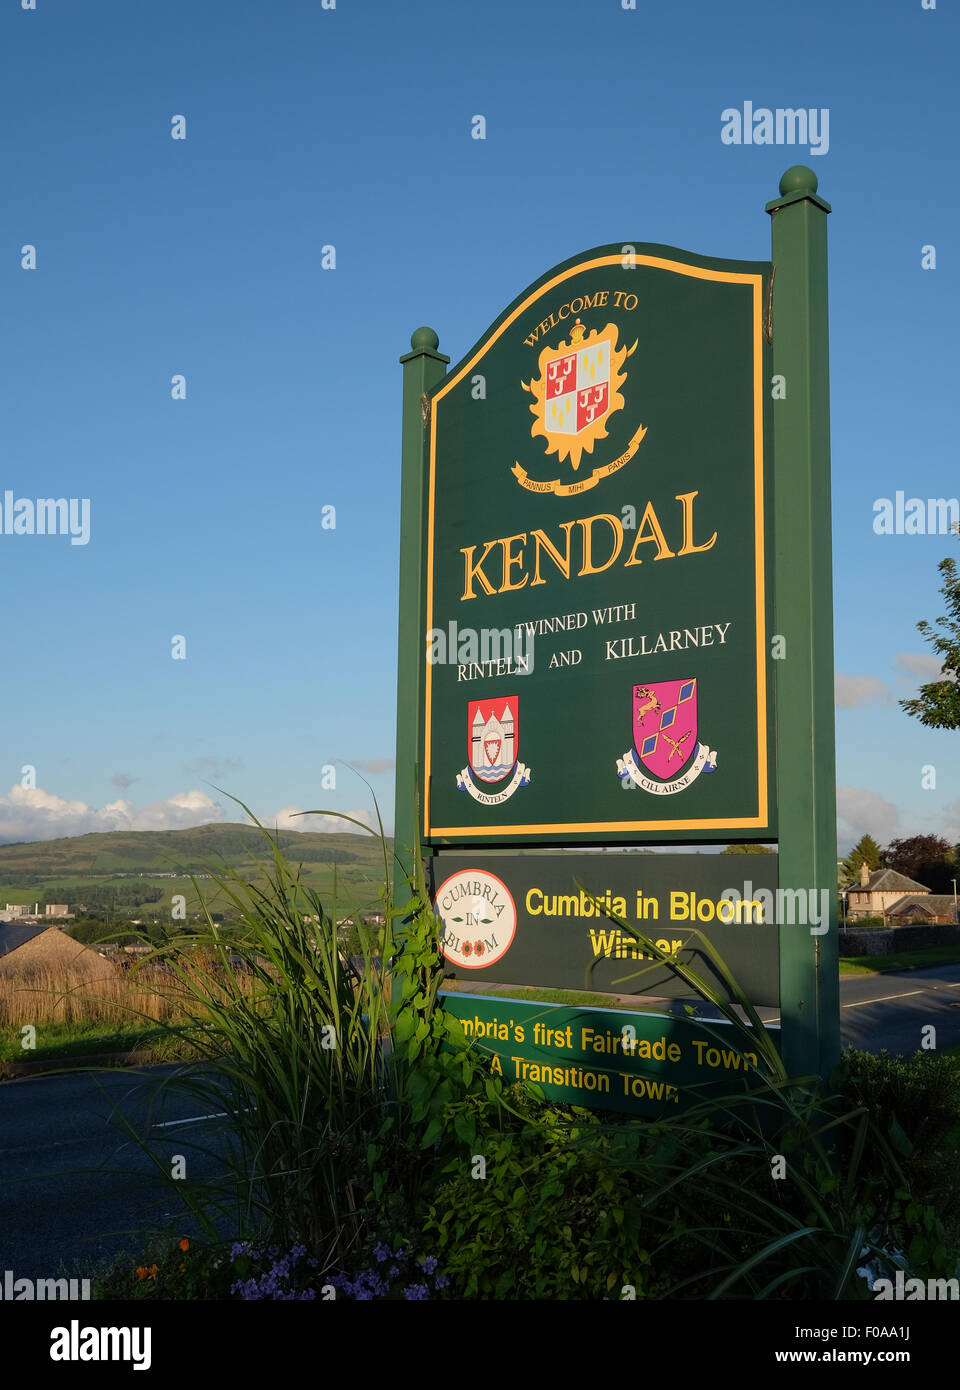 Ciudad de Kendal Road sign, Cumbria, Reino Unido Foto de stock